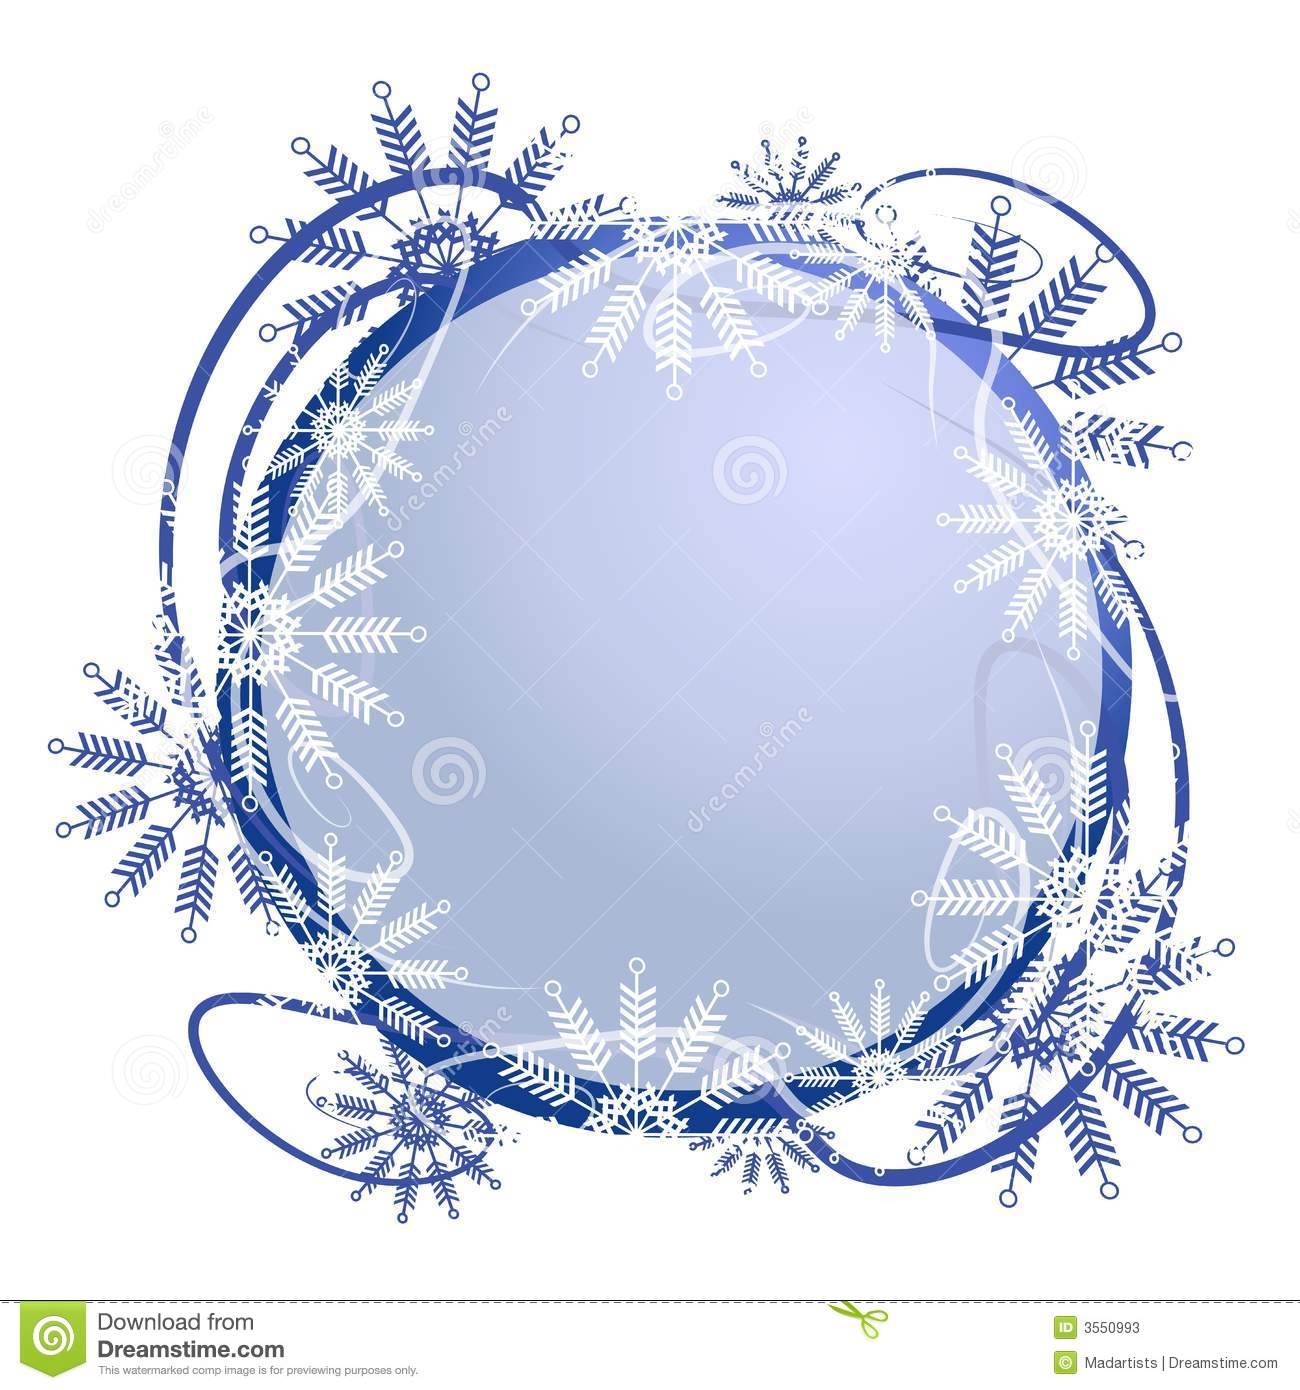 Clip Art Illustration Featuring A Unique Snowflake Border Frame